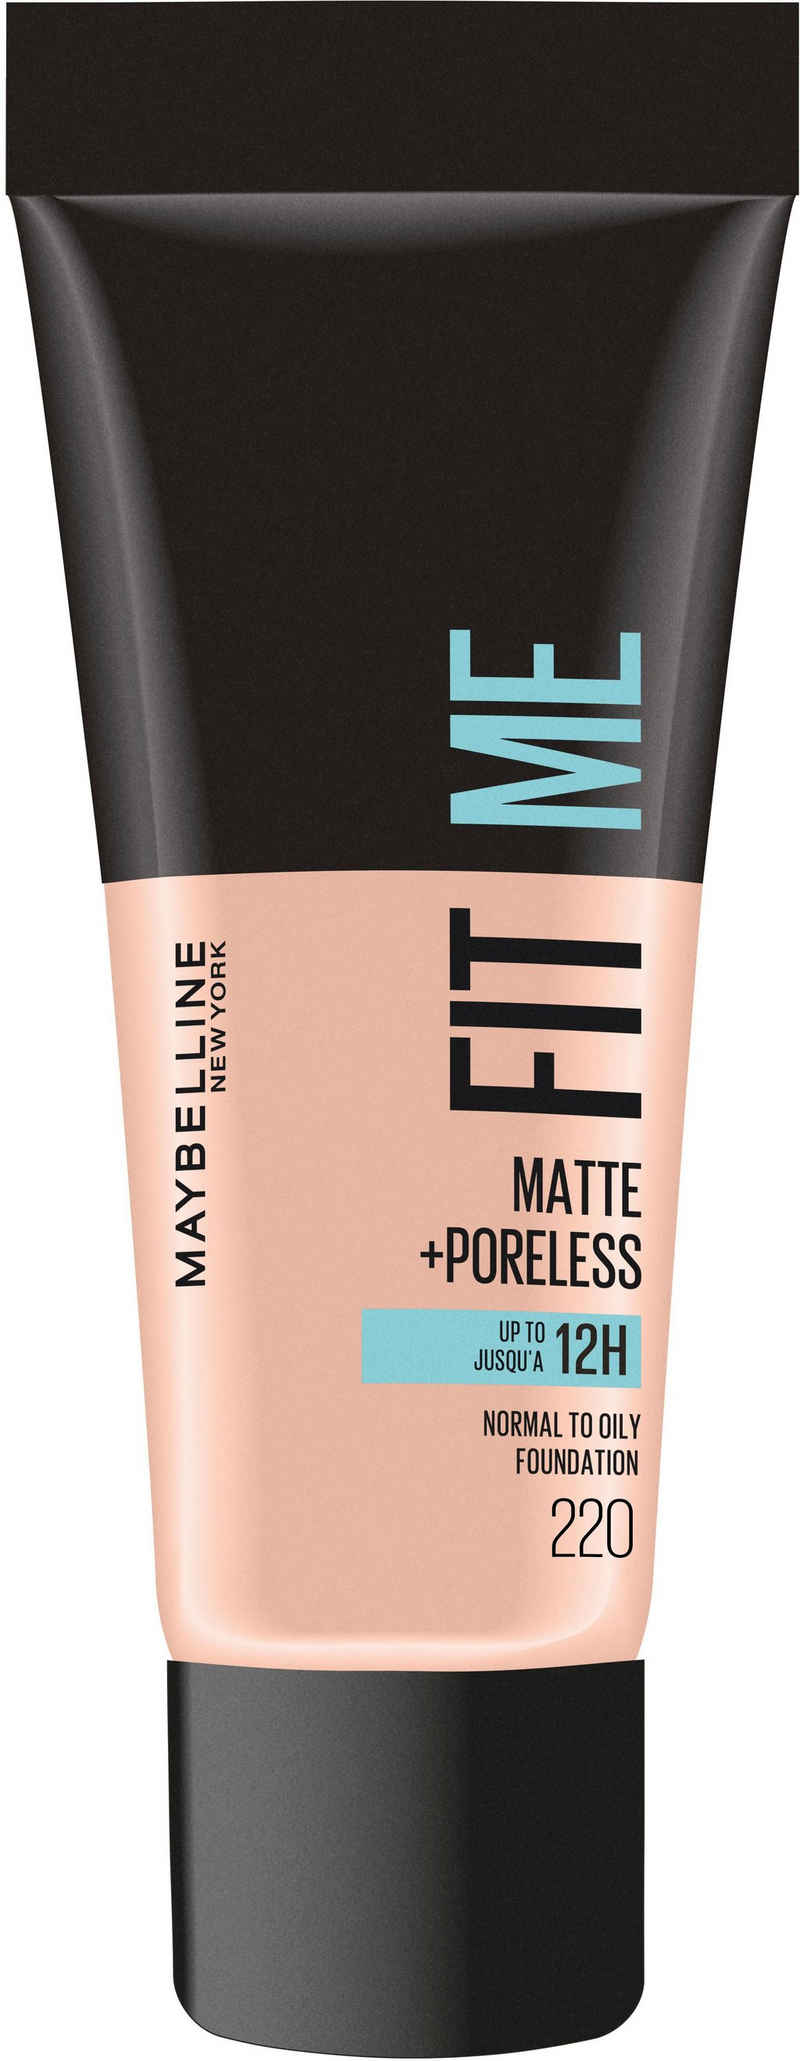 MAYBELLINE NEW YORK Foundation Maybelline New York Fit Me! Matte + Poreless Make-Up